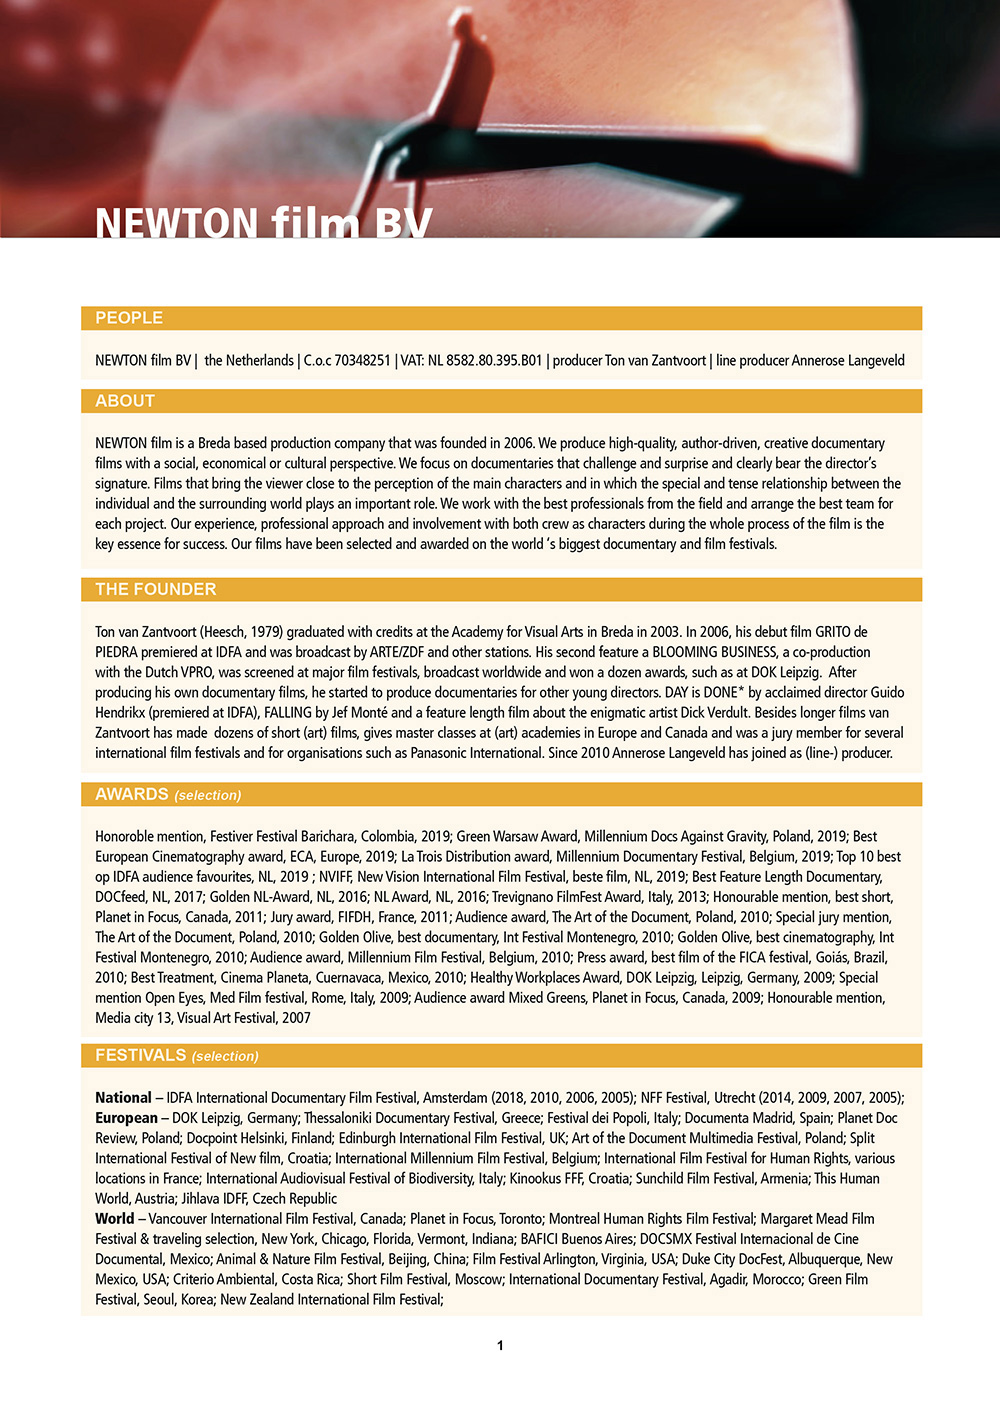 NEWTON-film-cv-page-1of5